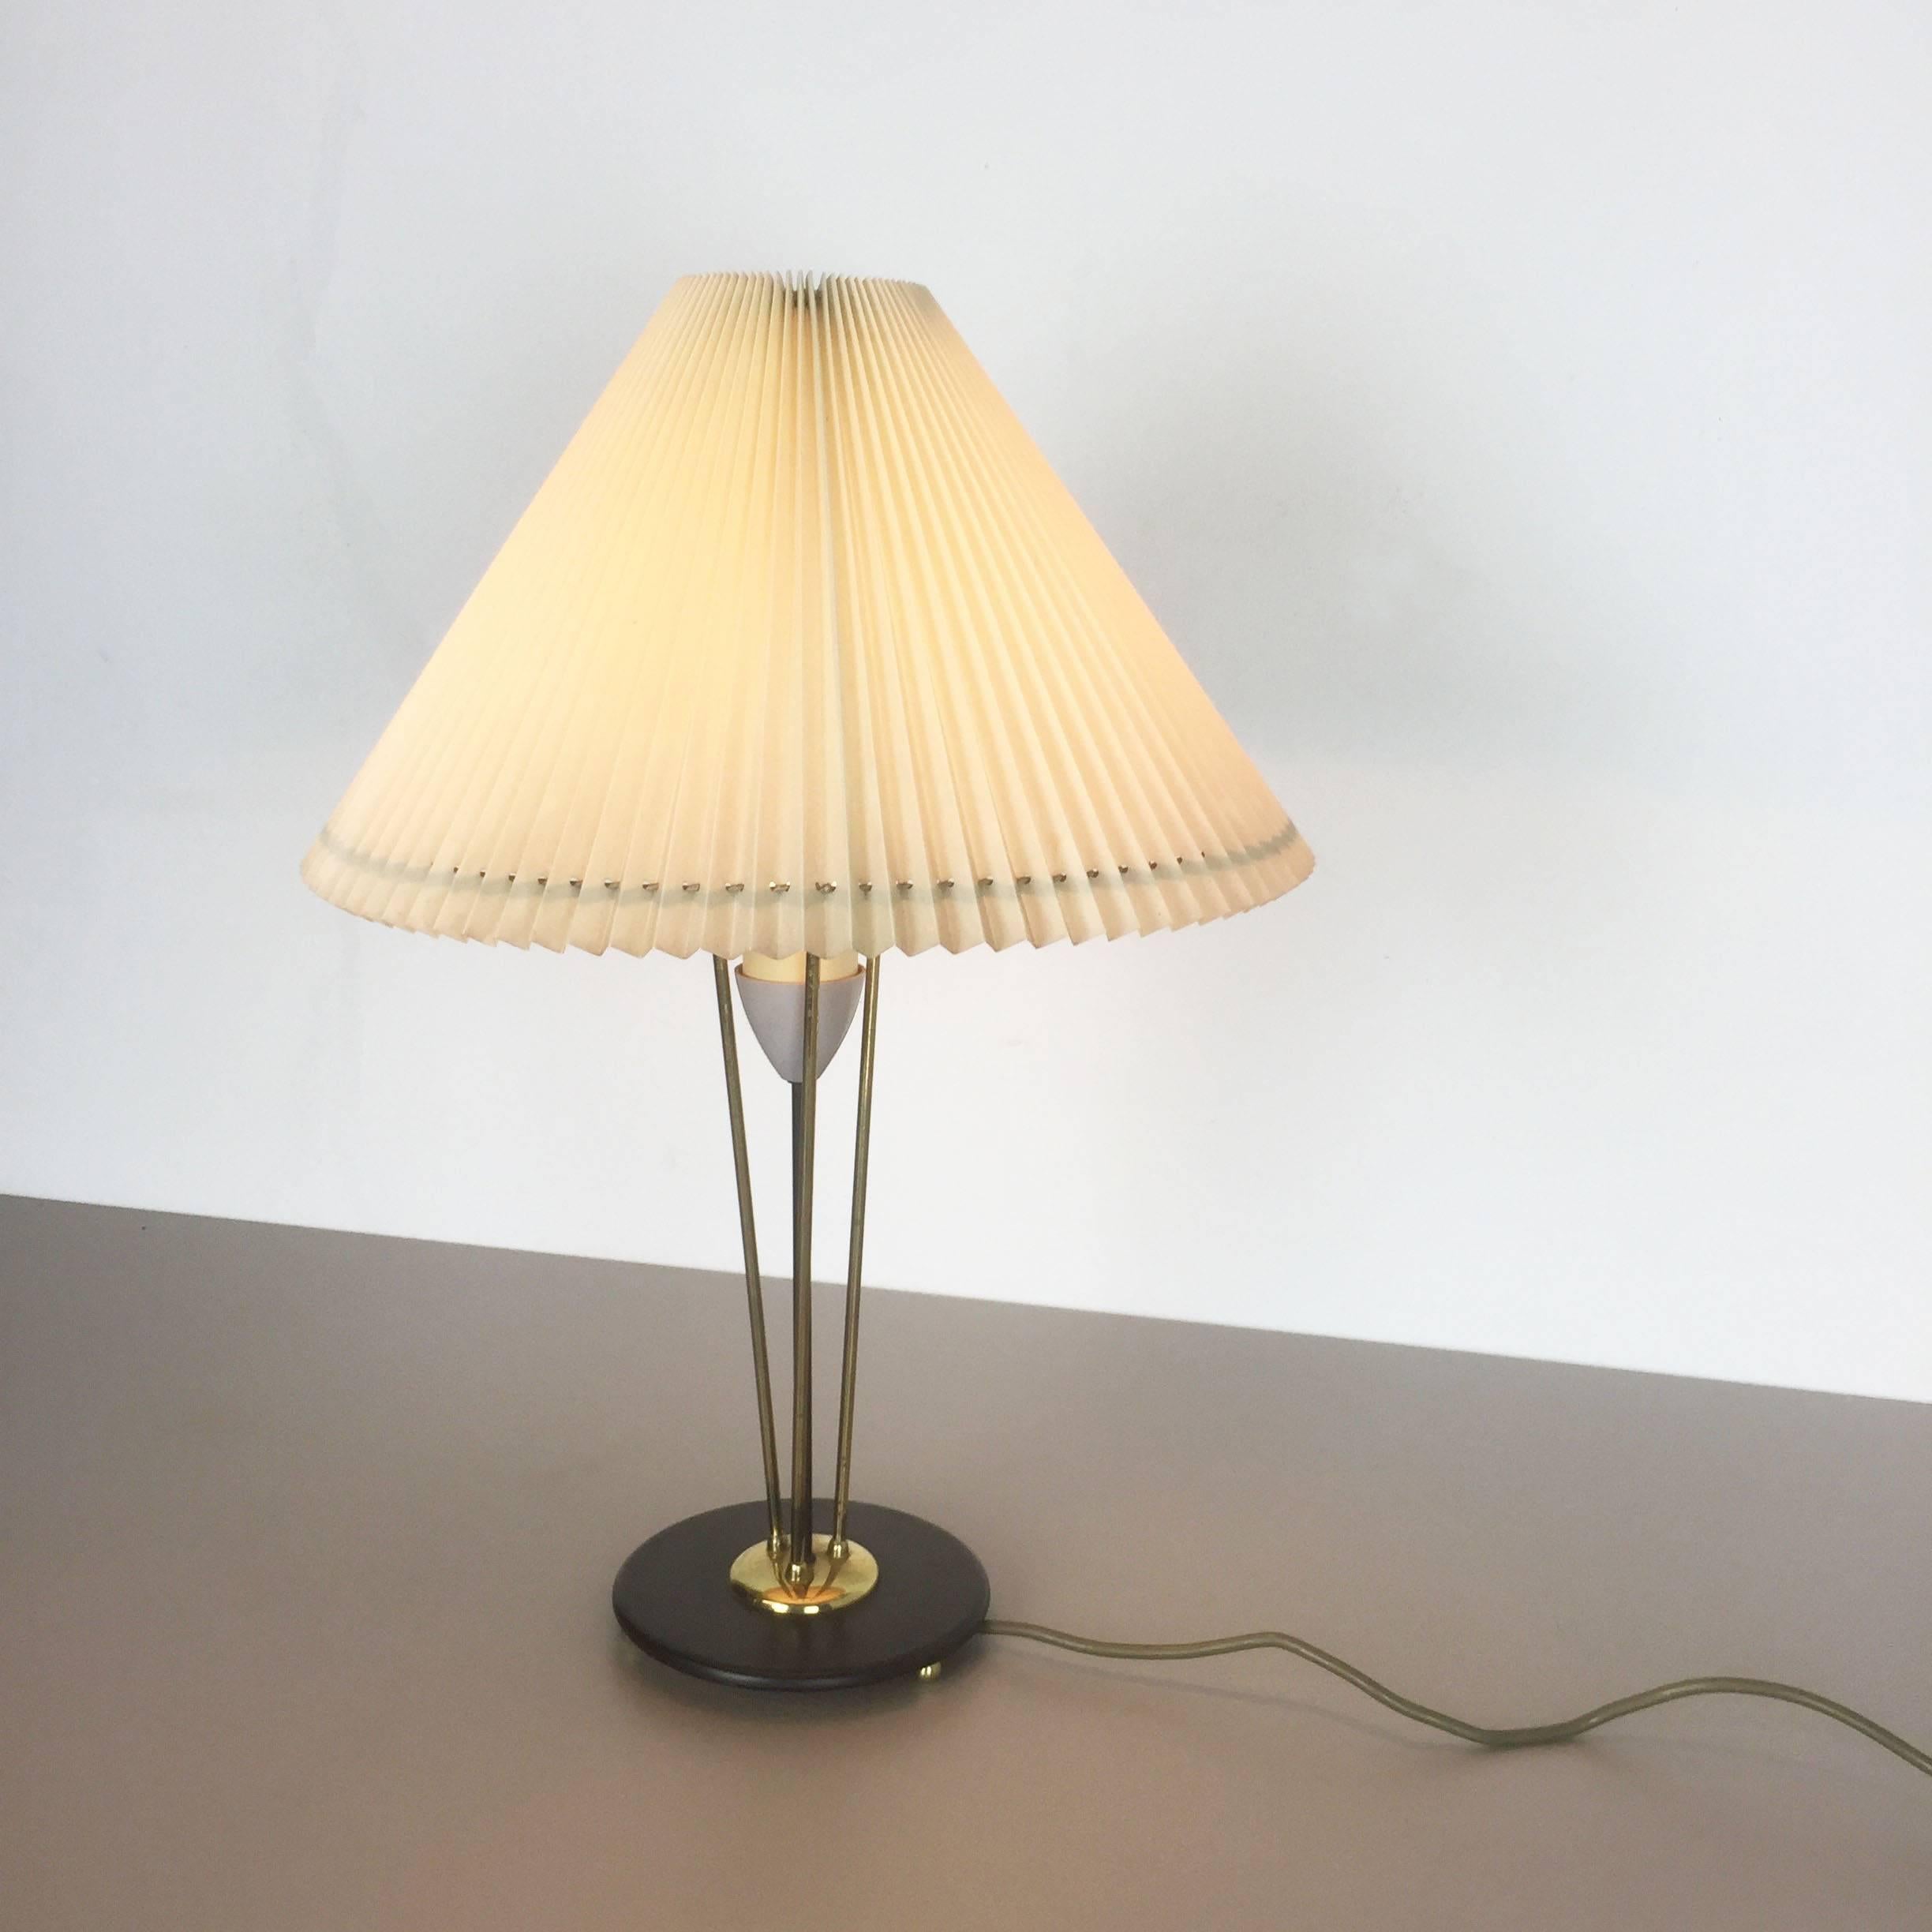 Original Modernist Huge Table Light with Metal Base, Italy, 1960s For Sale 2